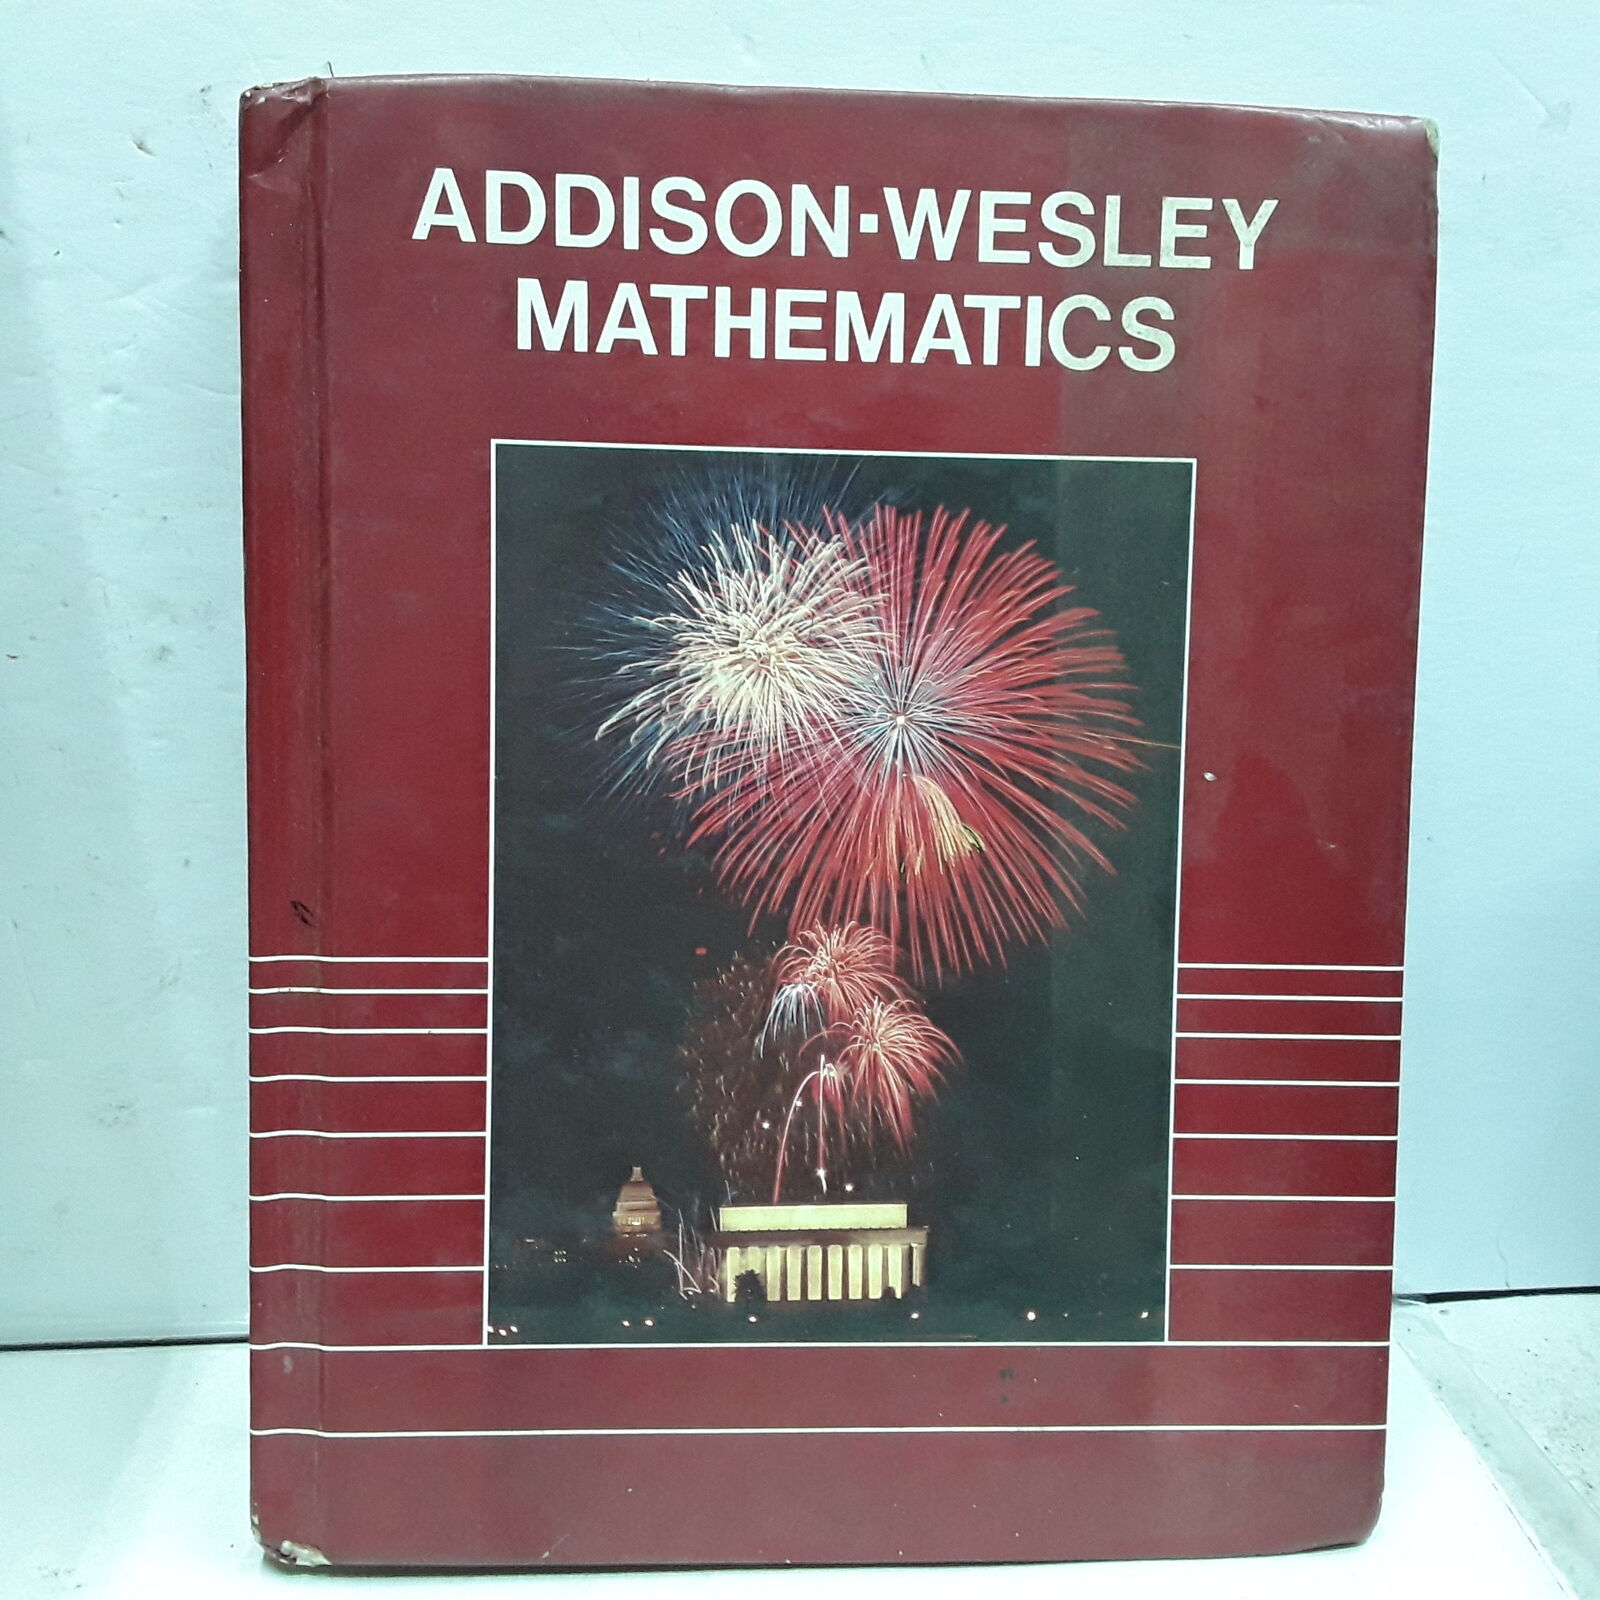 addison-wesley-mathematics-grade-5-student-text-school-textbooks-study-guides